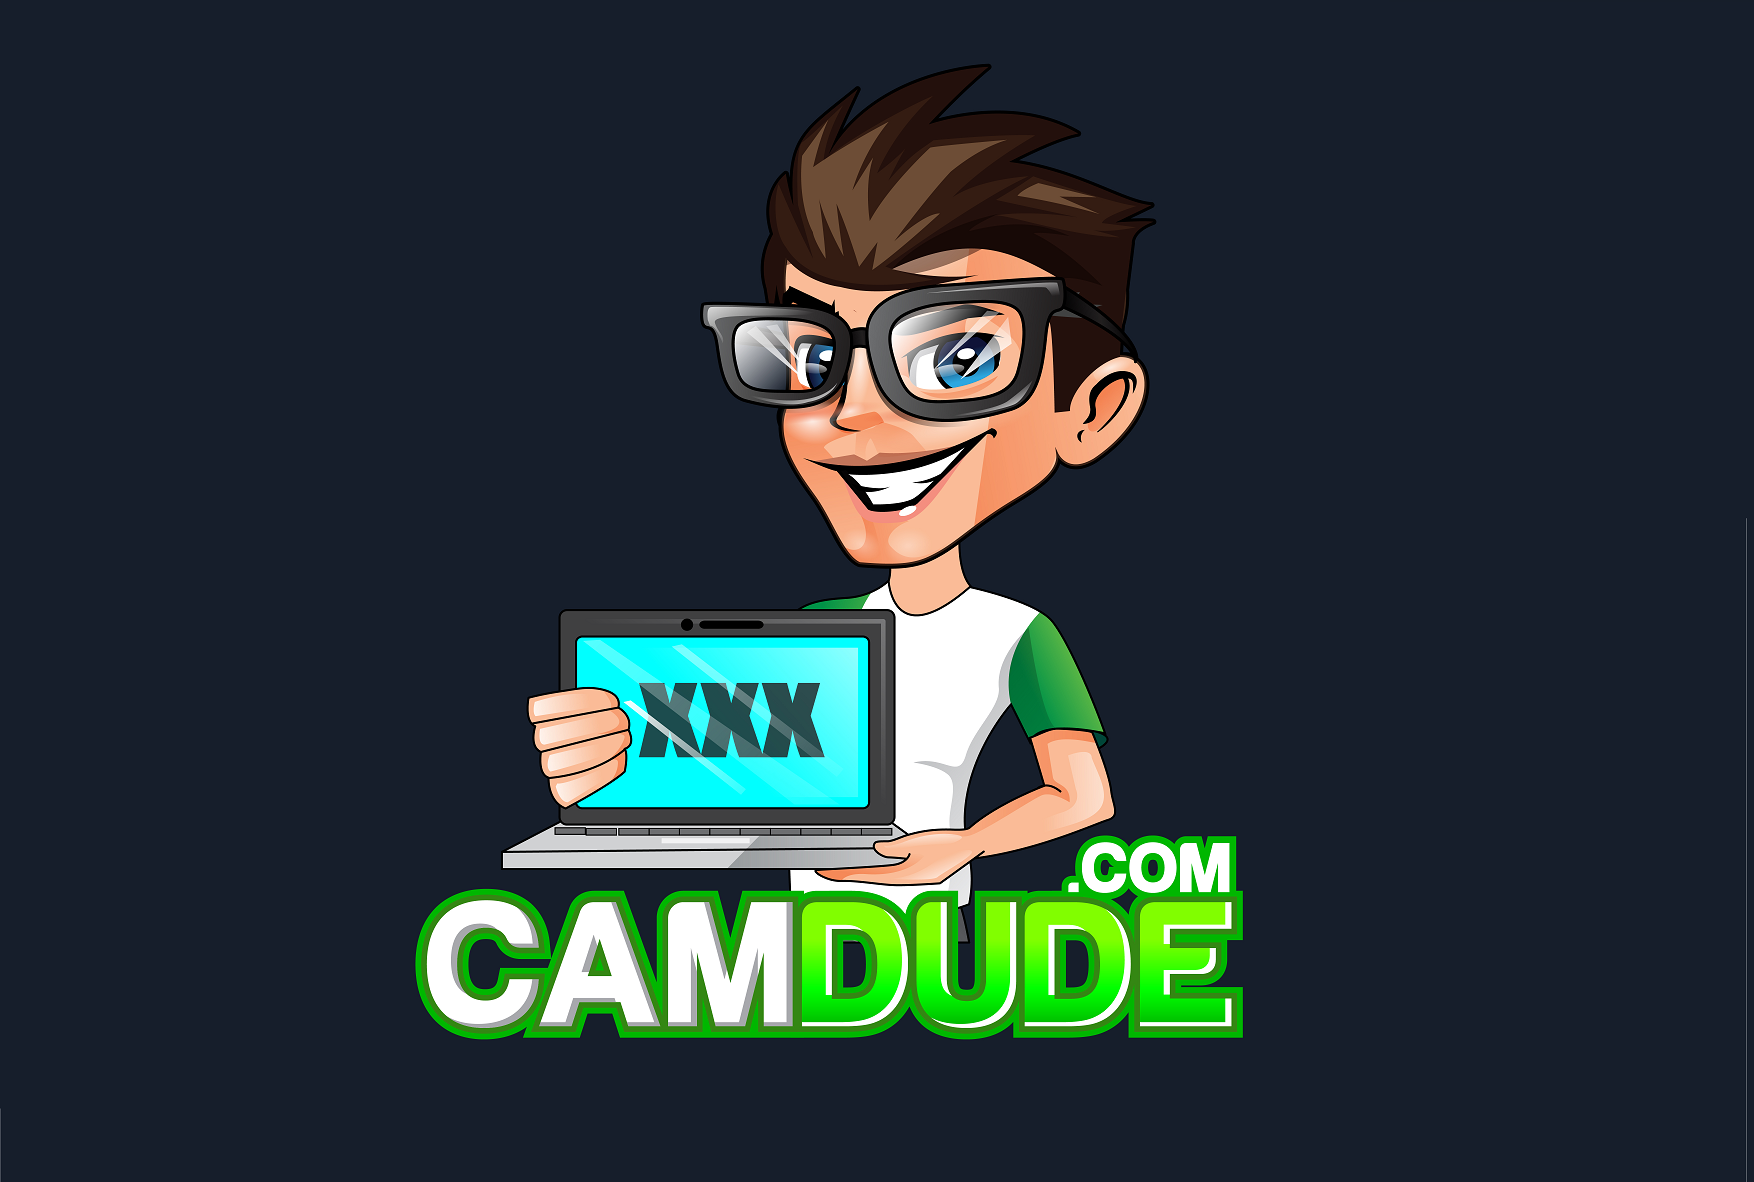 CamDude.com is Live